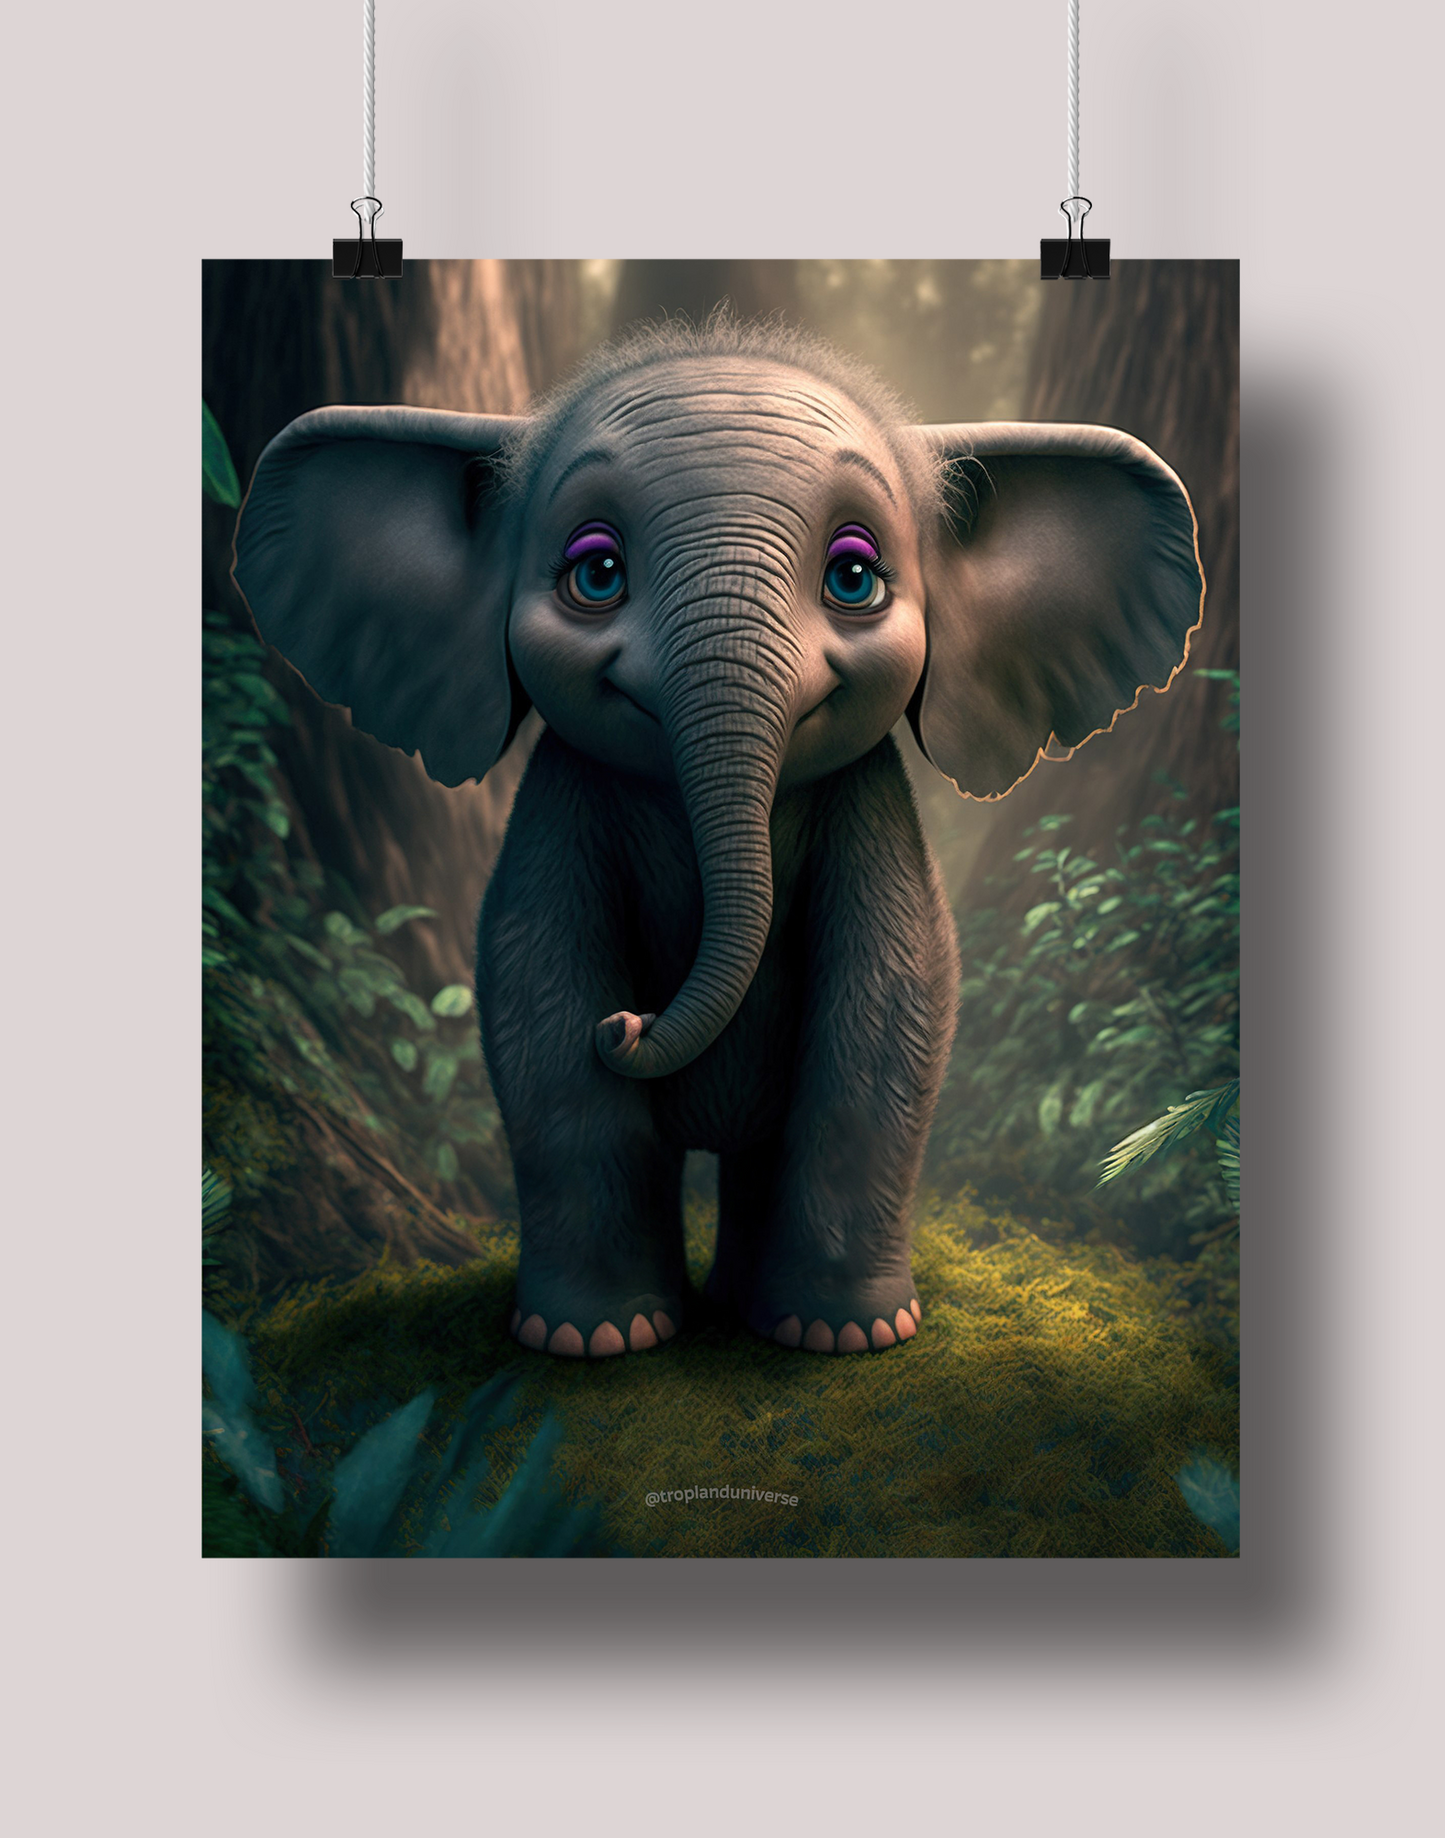 Elle the Elephant: Museum-Grade Poster - Tropland Universe